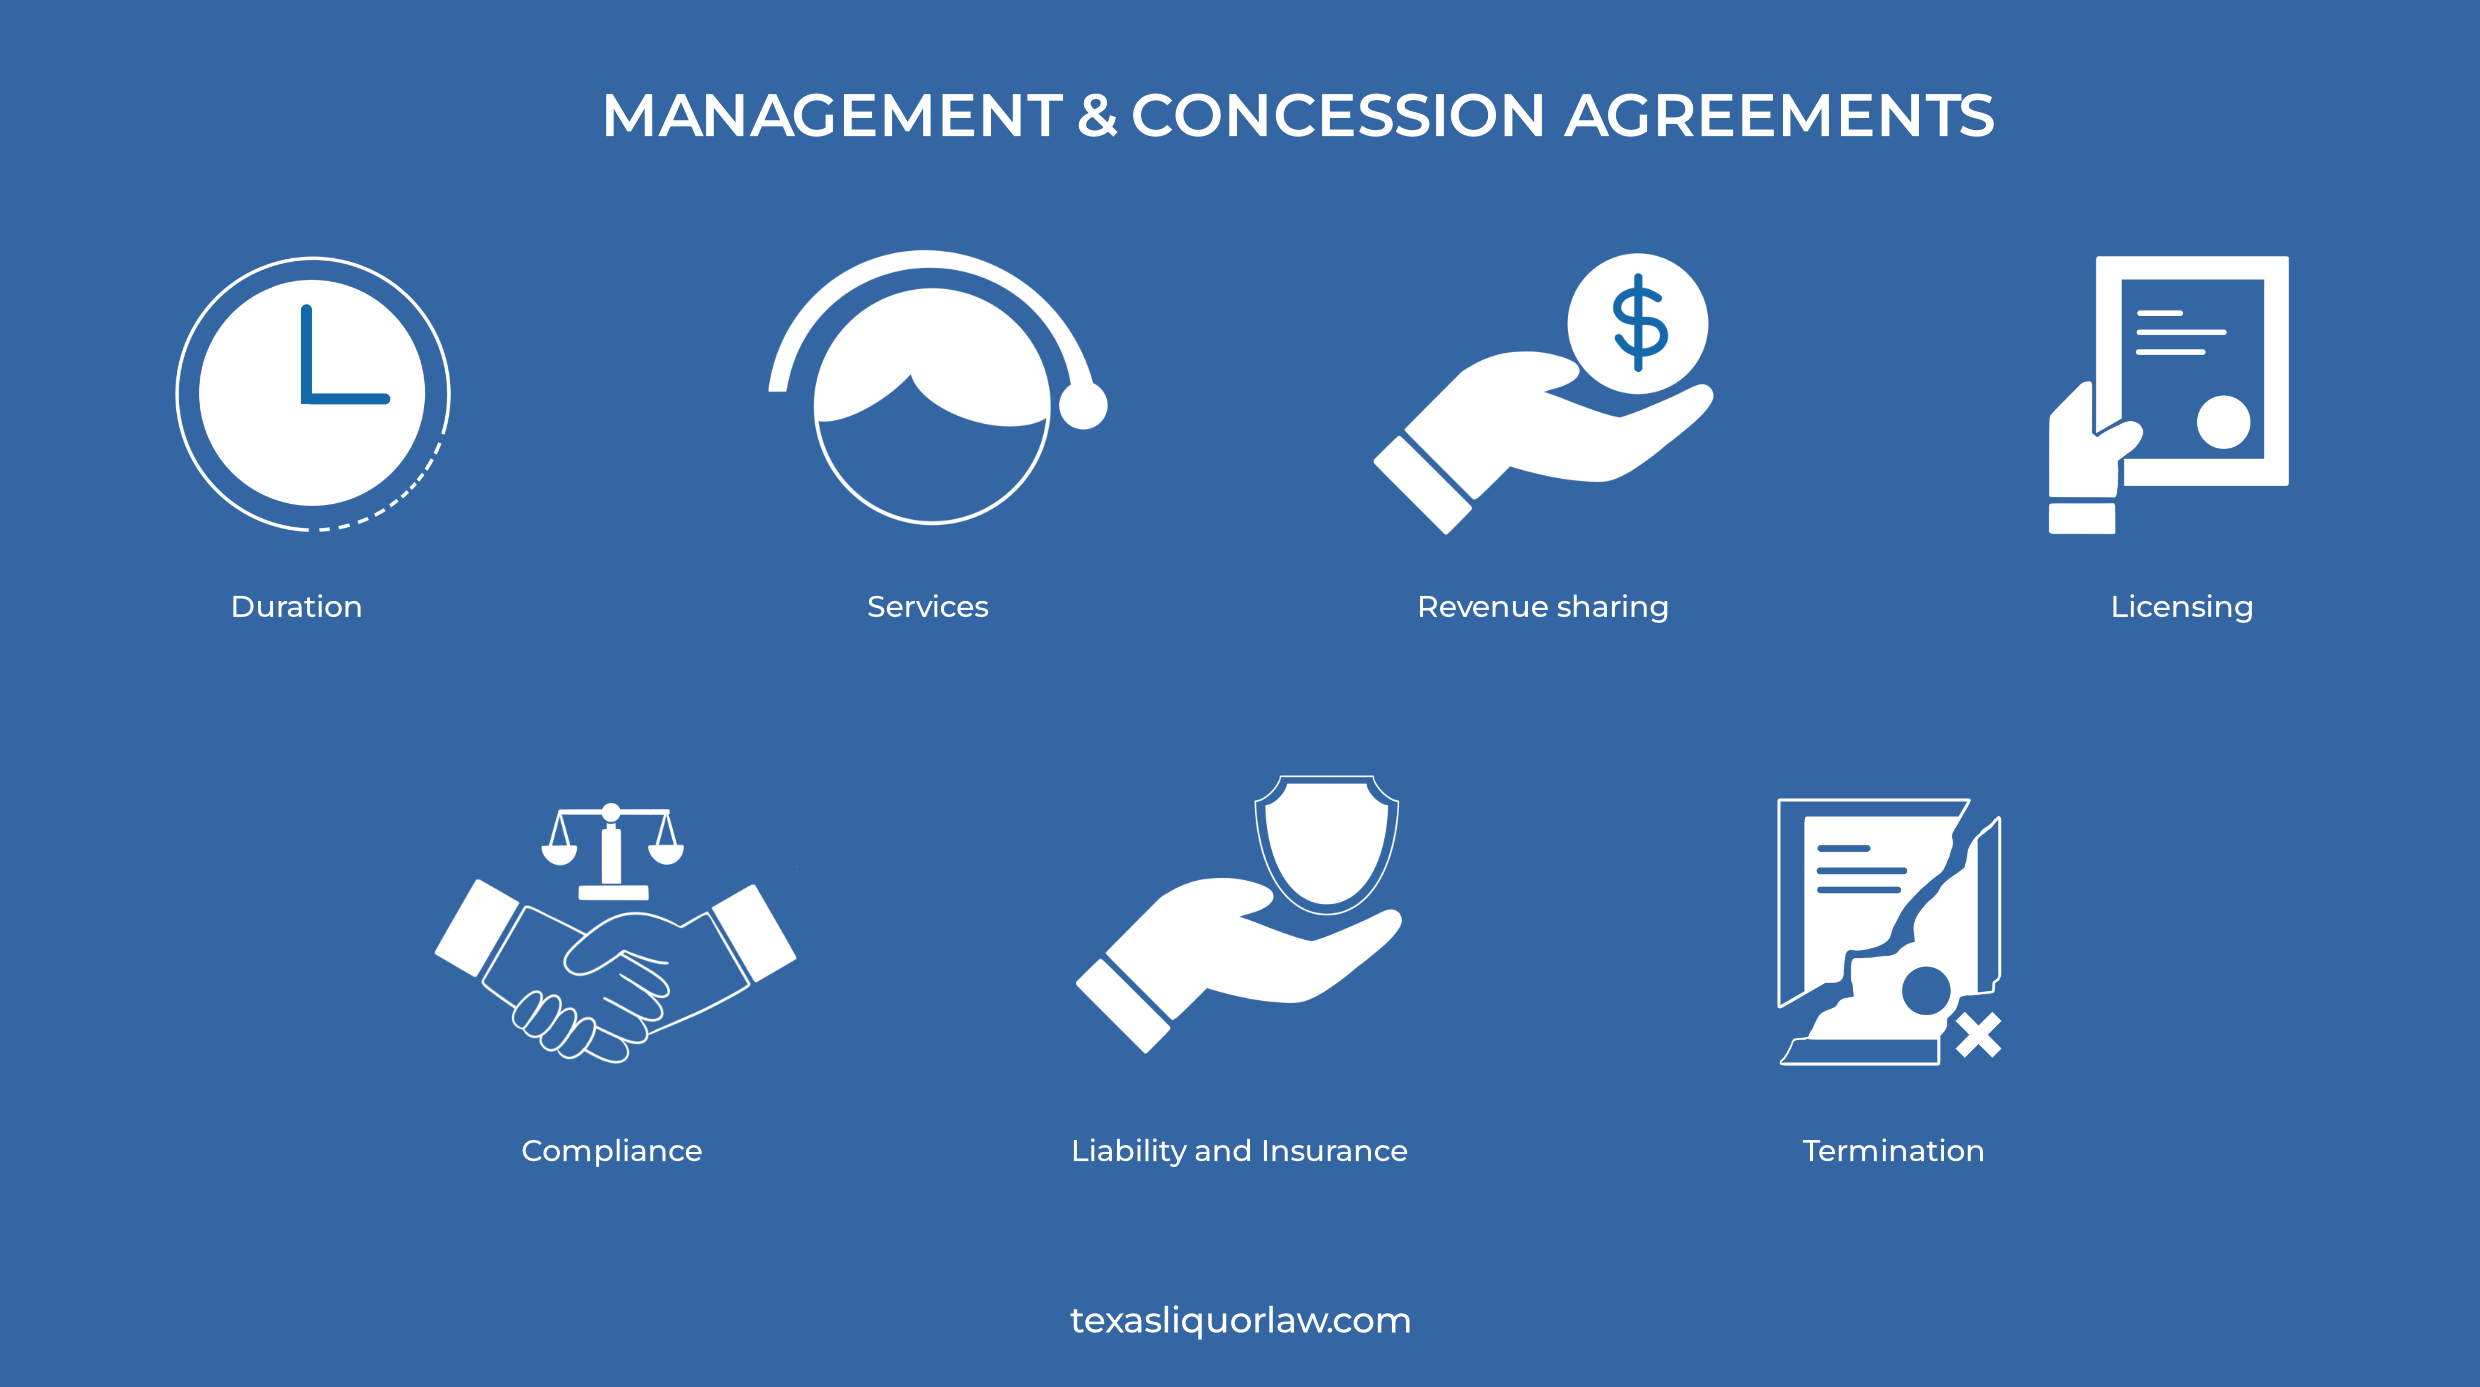 Management & Concession Agreements